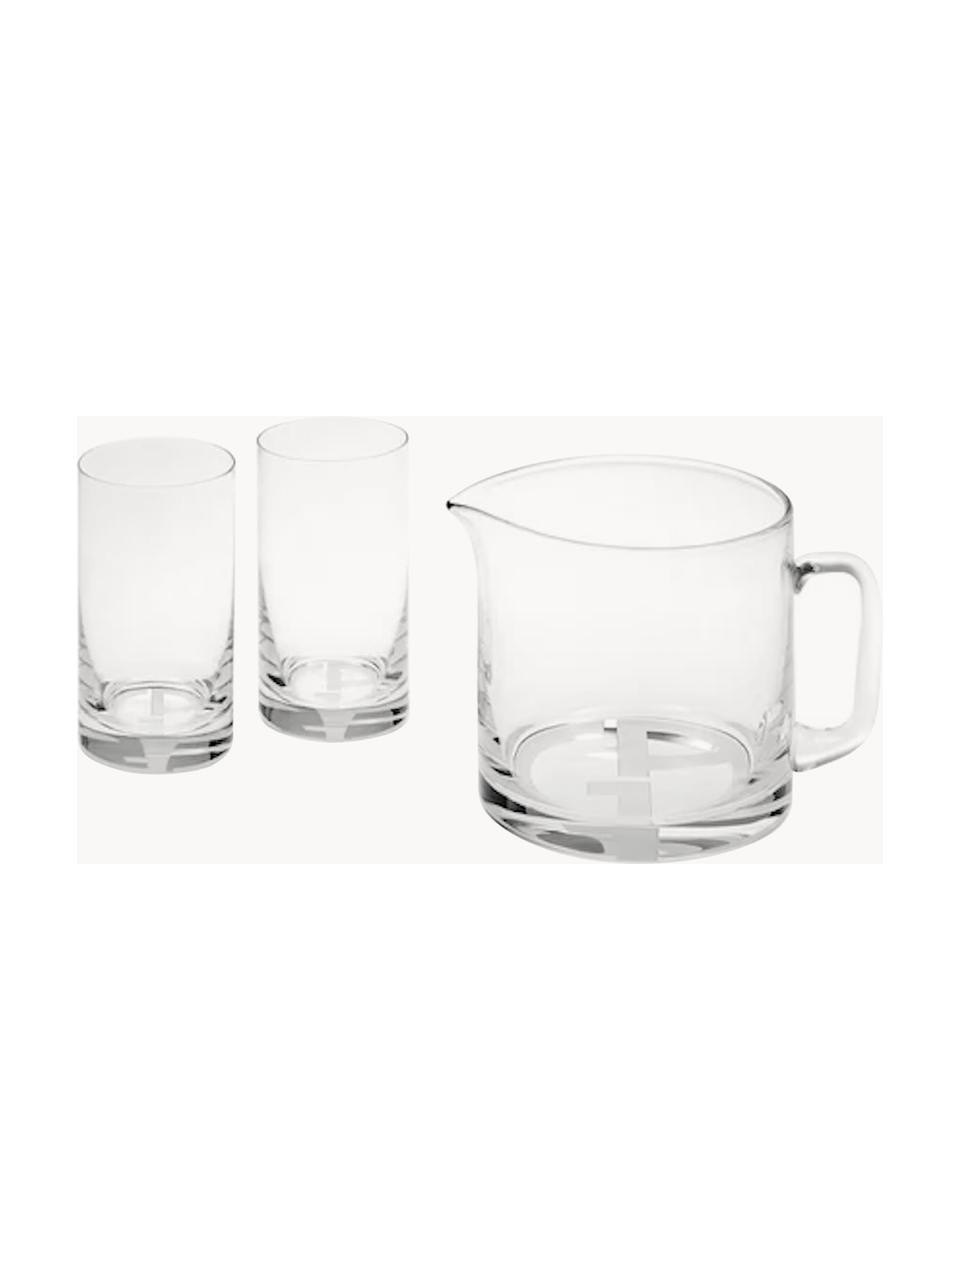 Copas de cristal Corelli con jarra, 3 uds., Cristal, Transparente, Set de diferentes tamaños